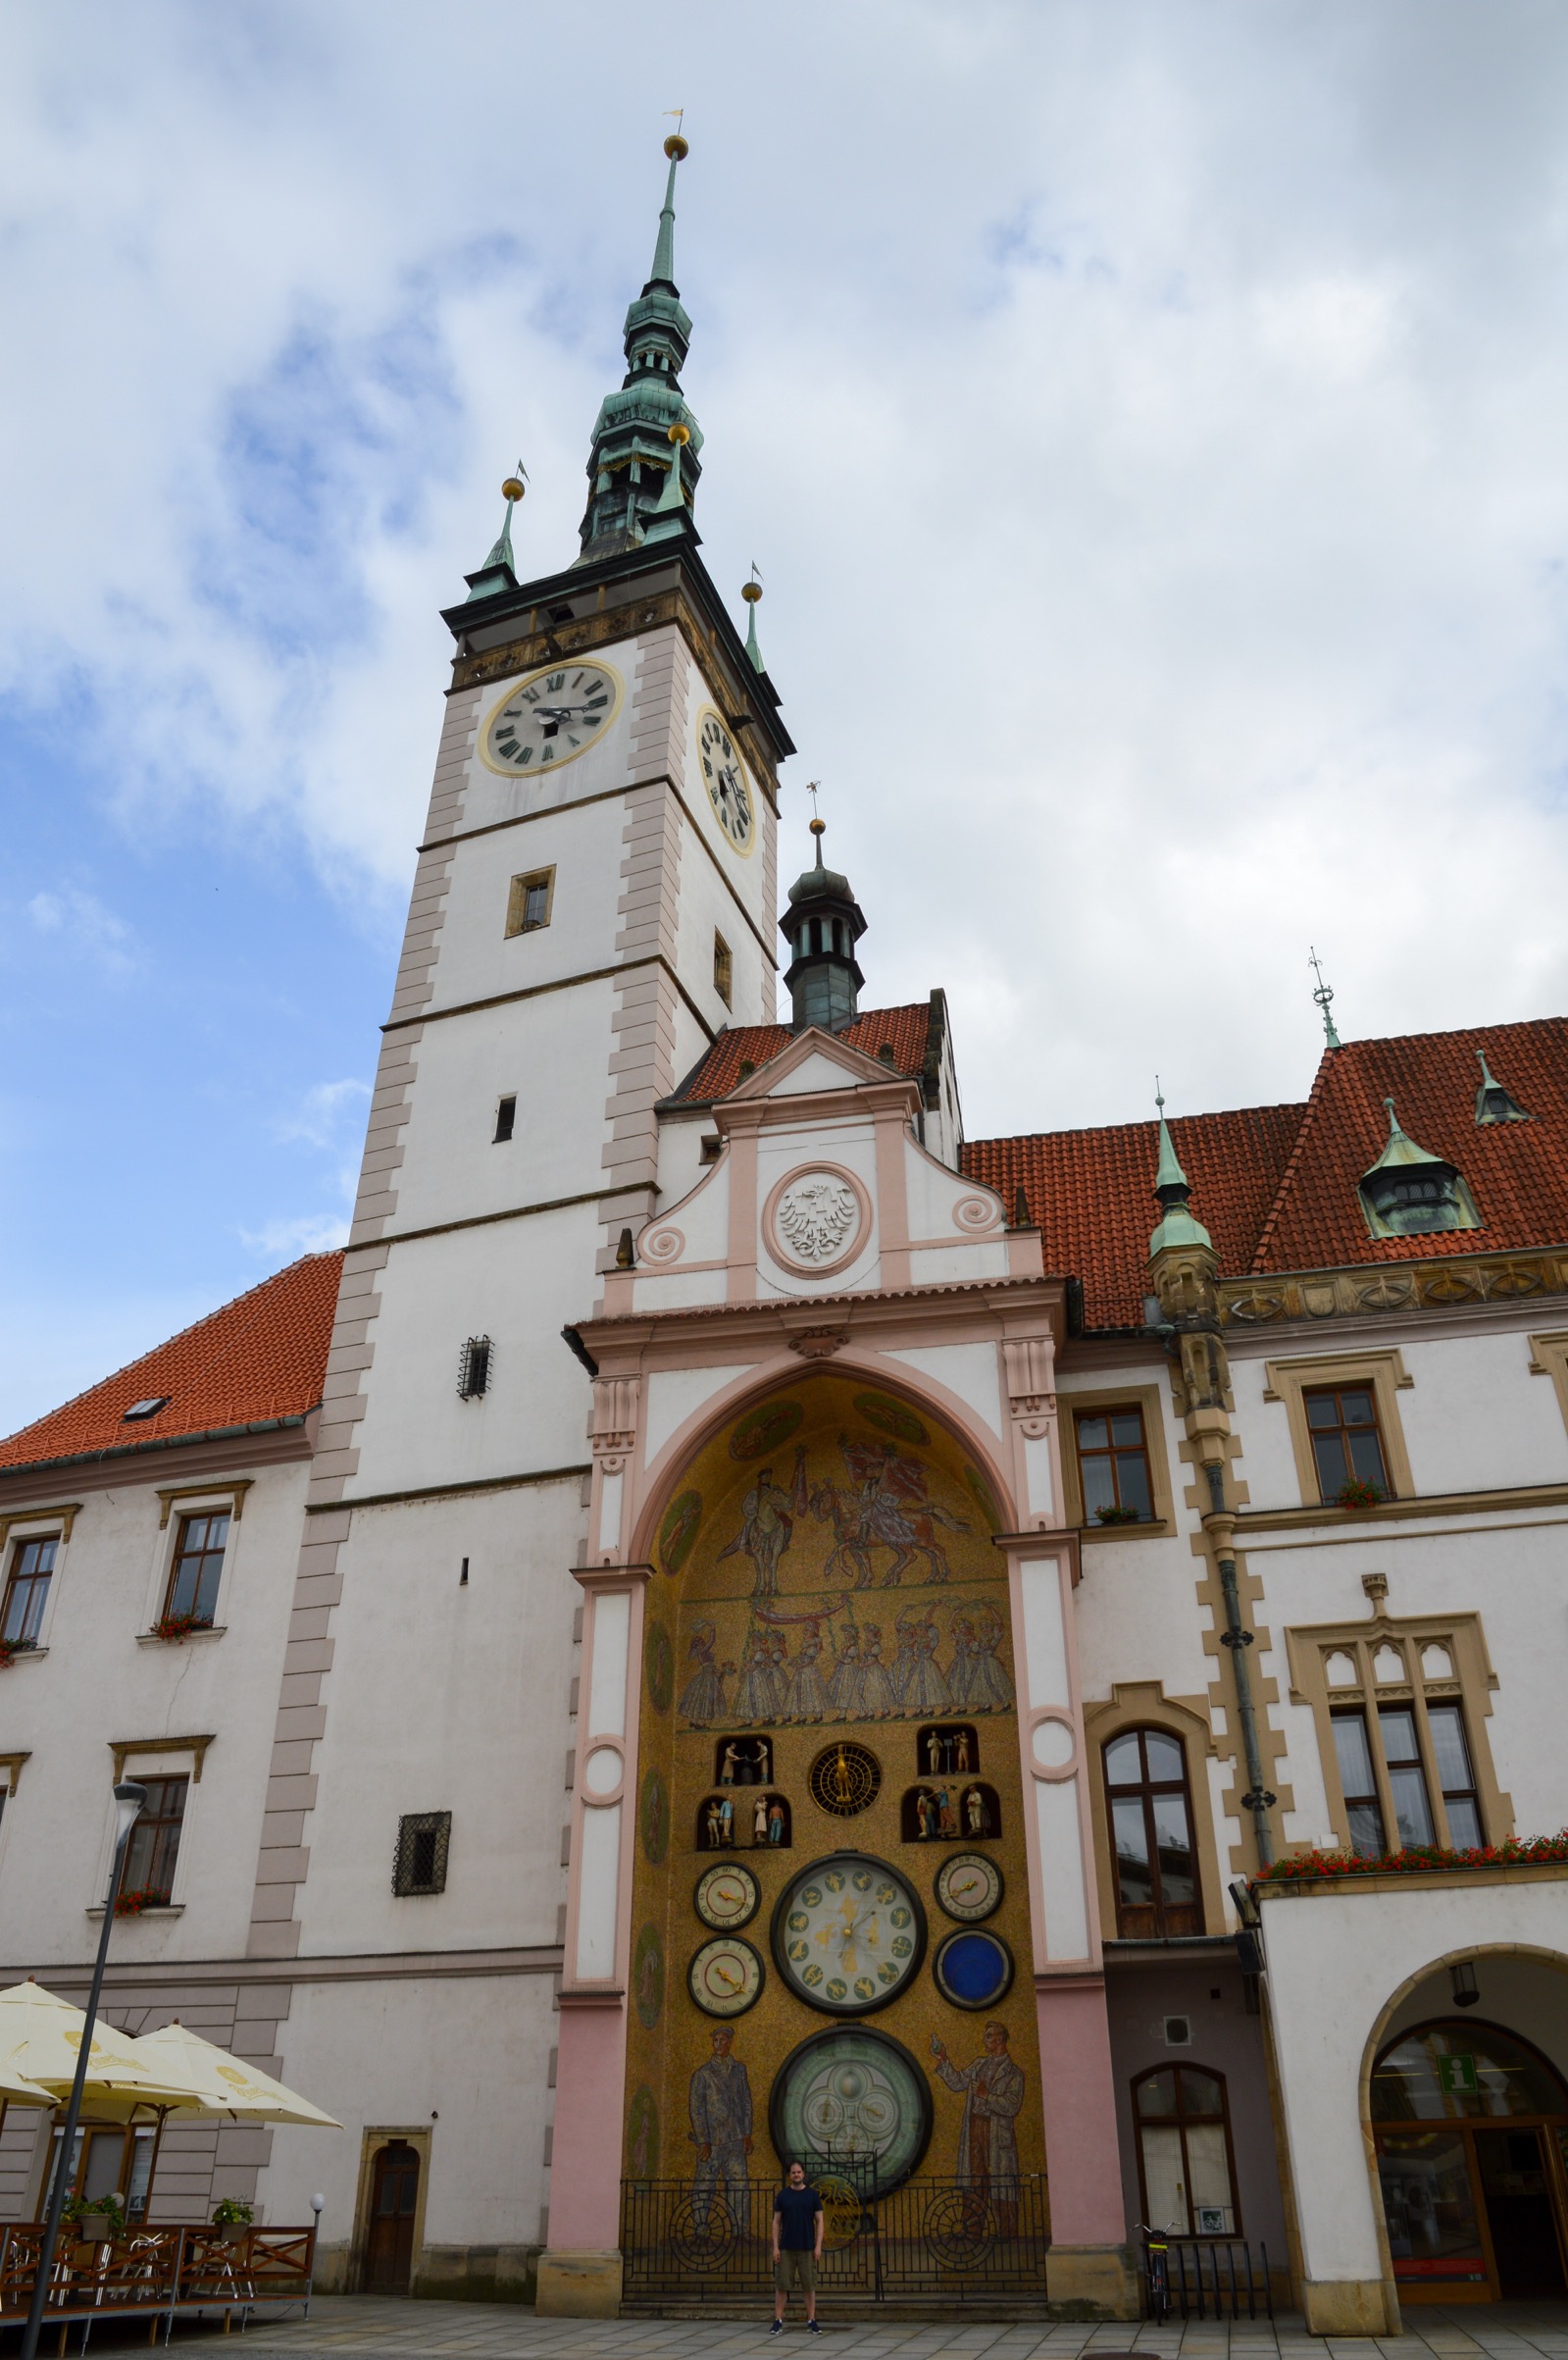 Olomouc Town Hall with Astronomical Clock, Czech Republic